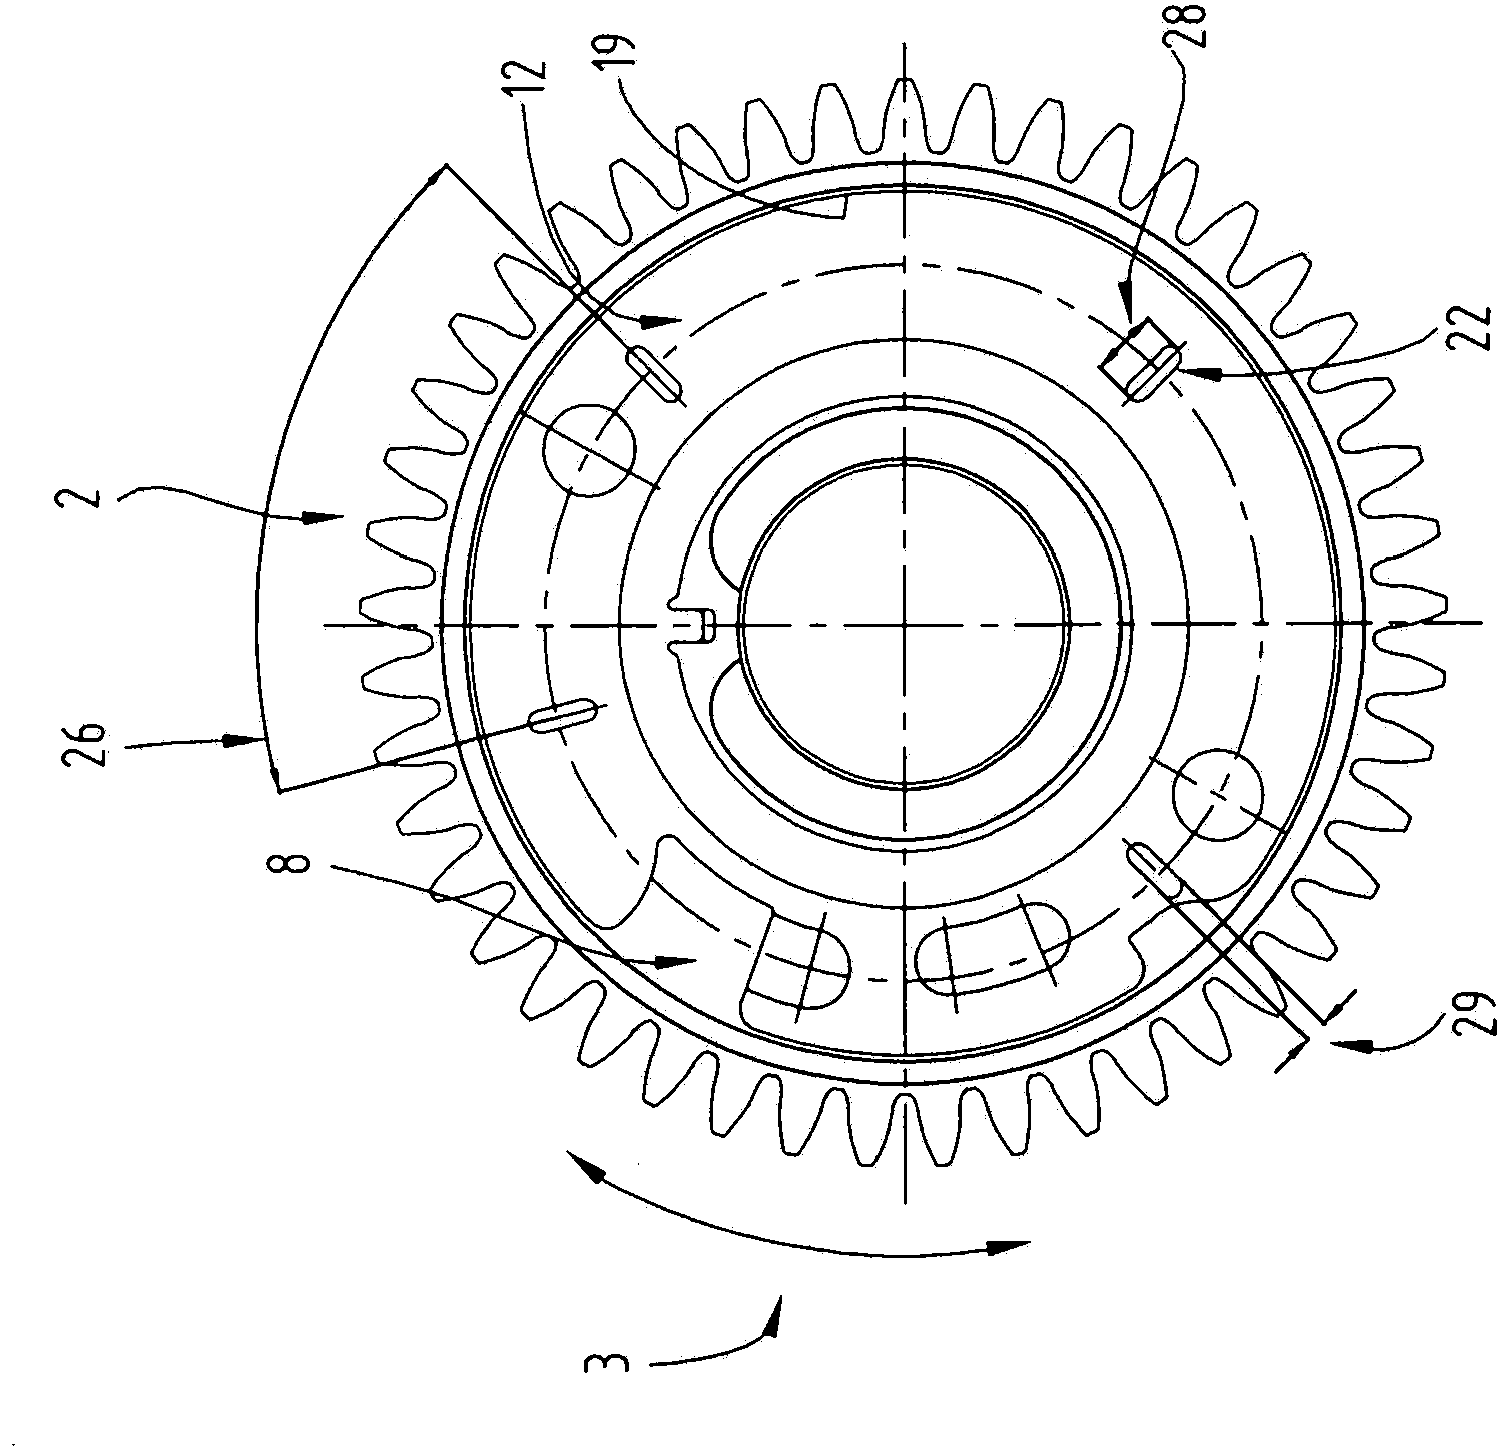 Gearwheel arrangement